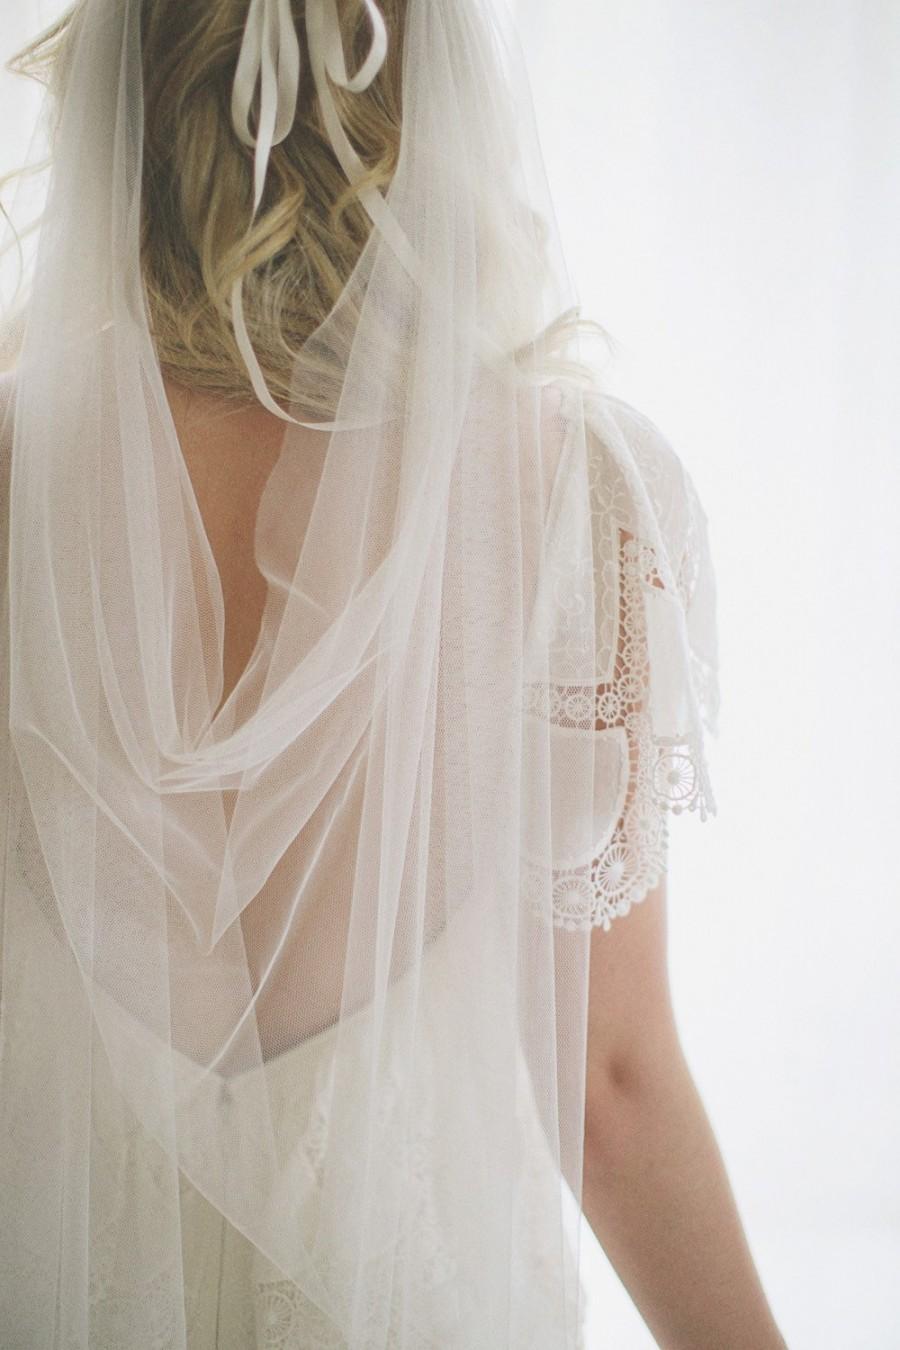 Mariage - Draped veil - SALE limited time only ! Marianna ivory veil, drape veil, tulle veil, wedding, bridal veil